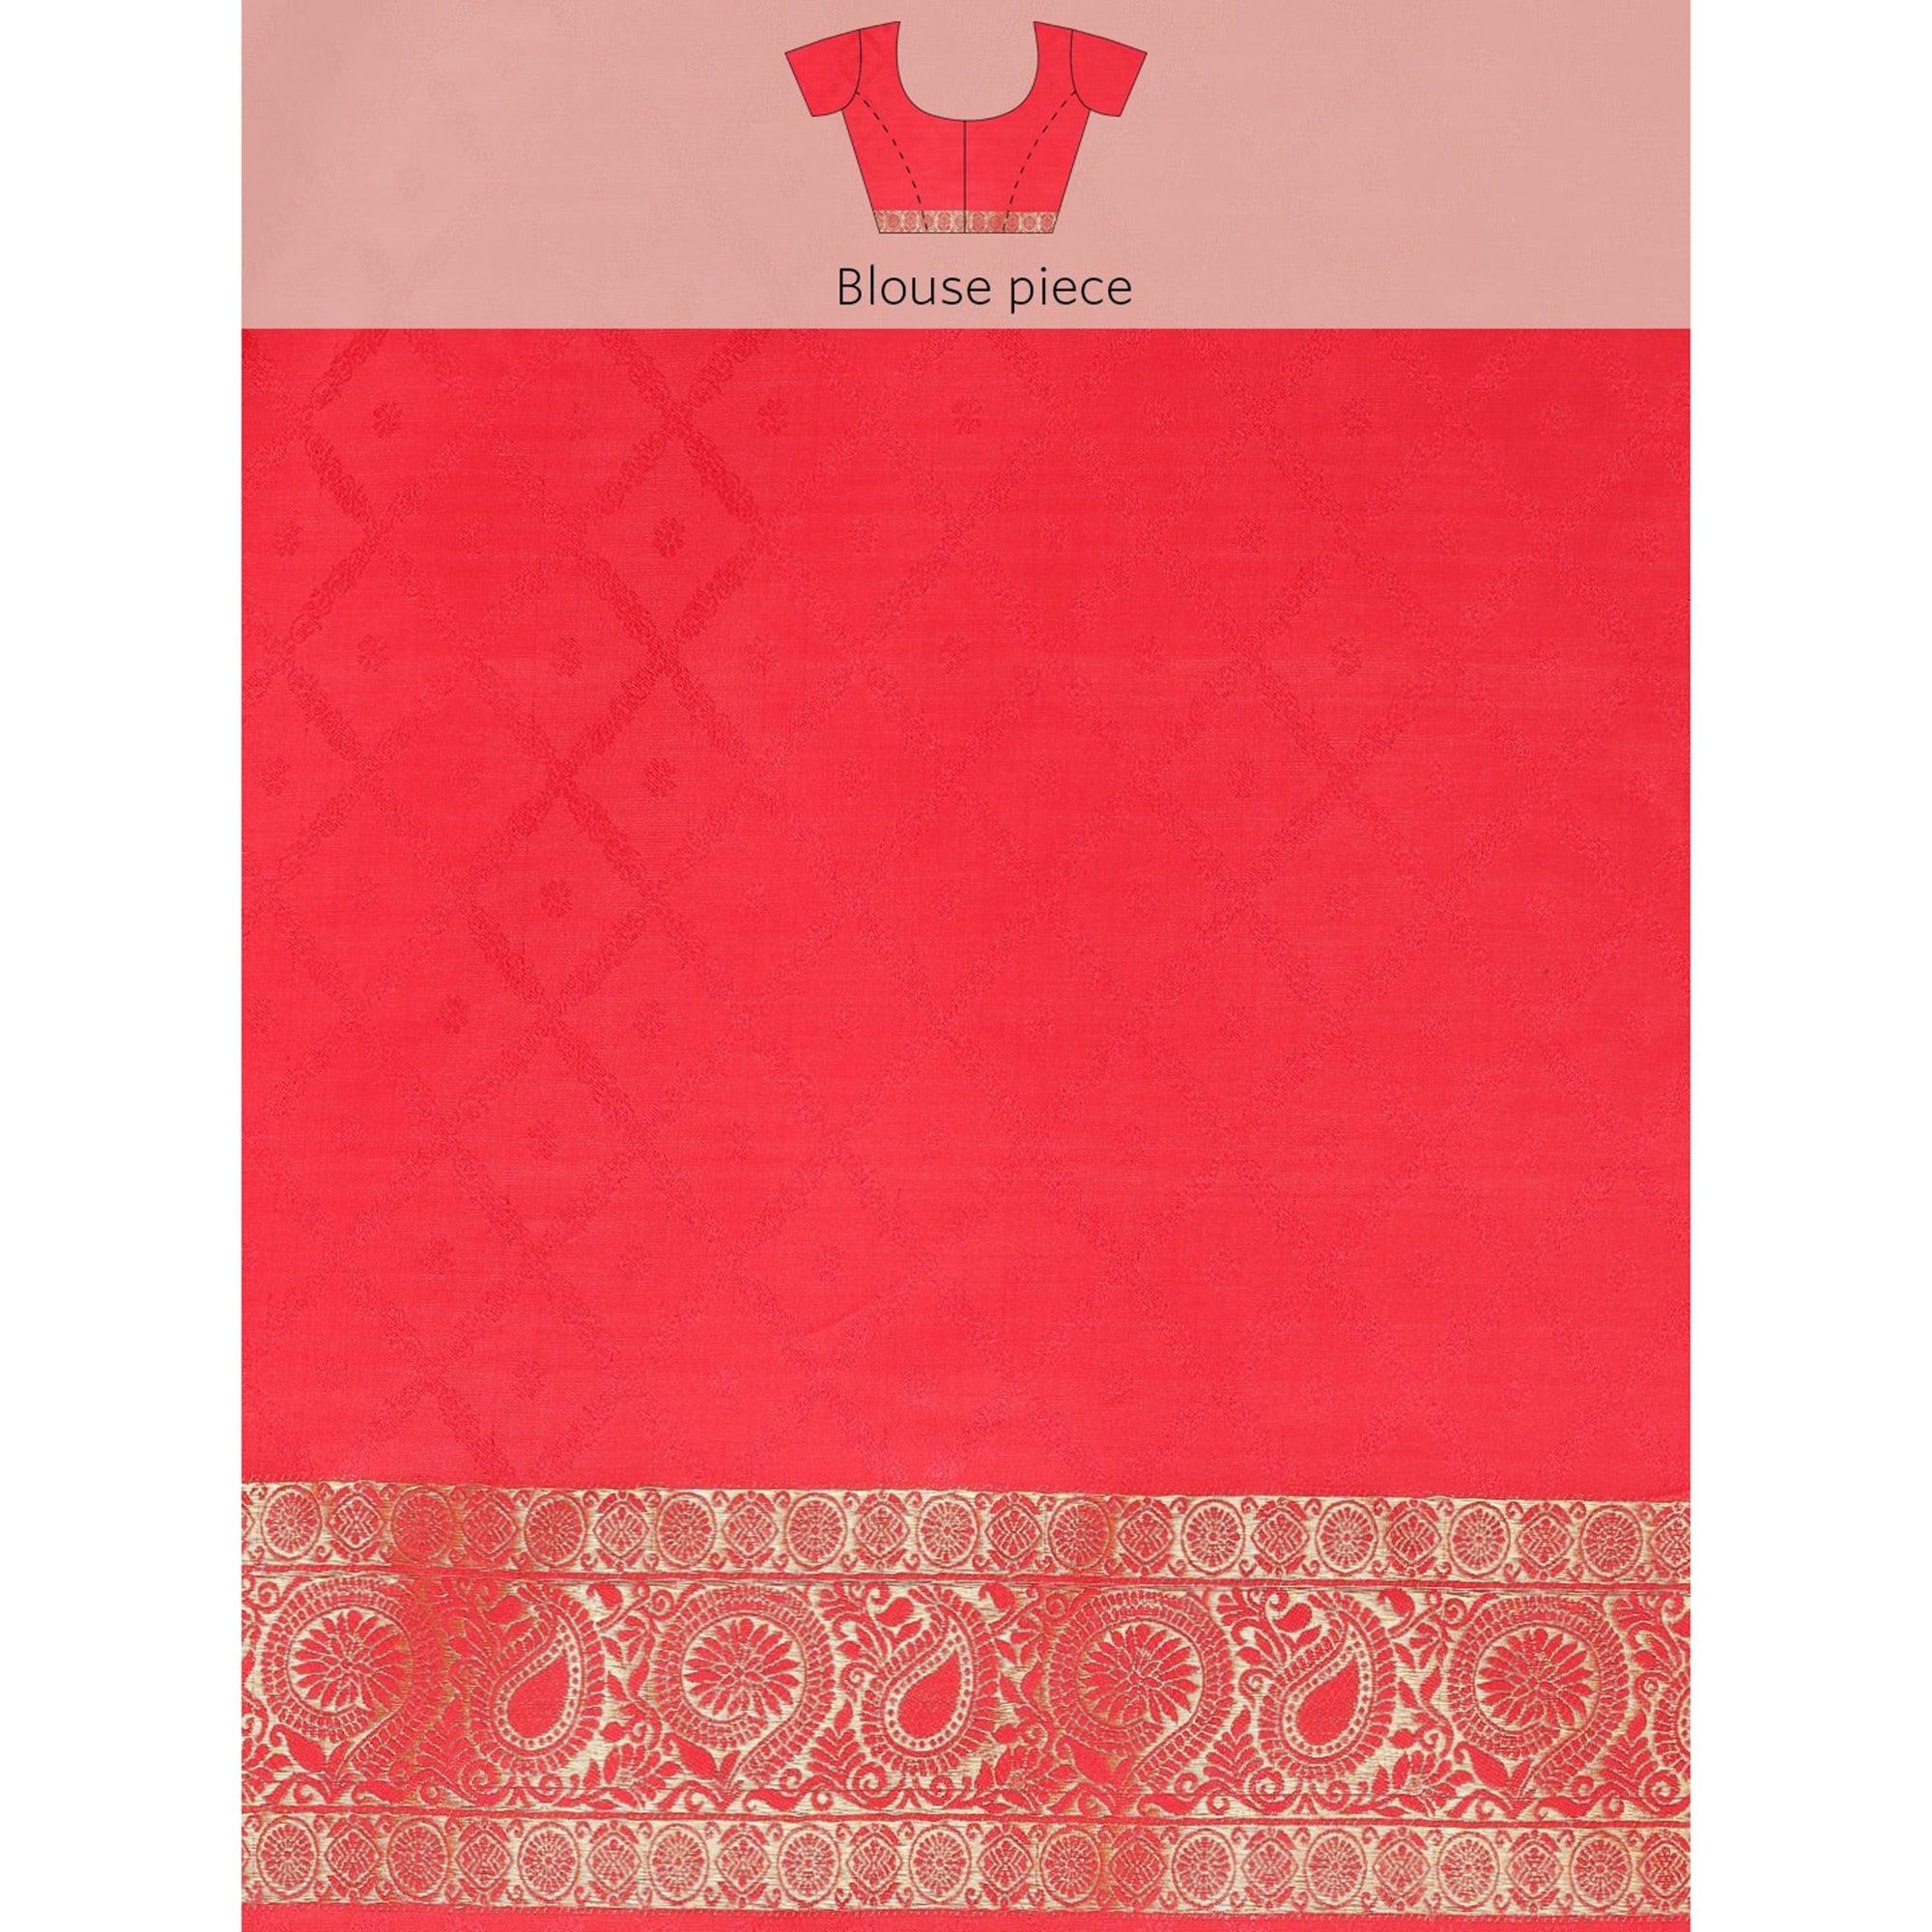 Red Festive Wear Weaving Kanjivaram Silk Saree - Peachmode